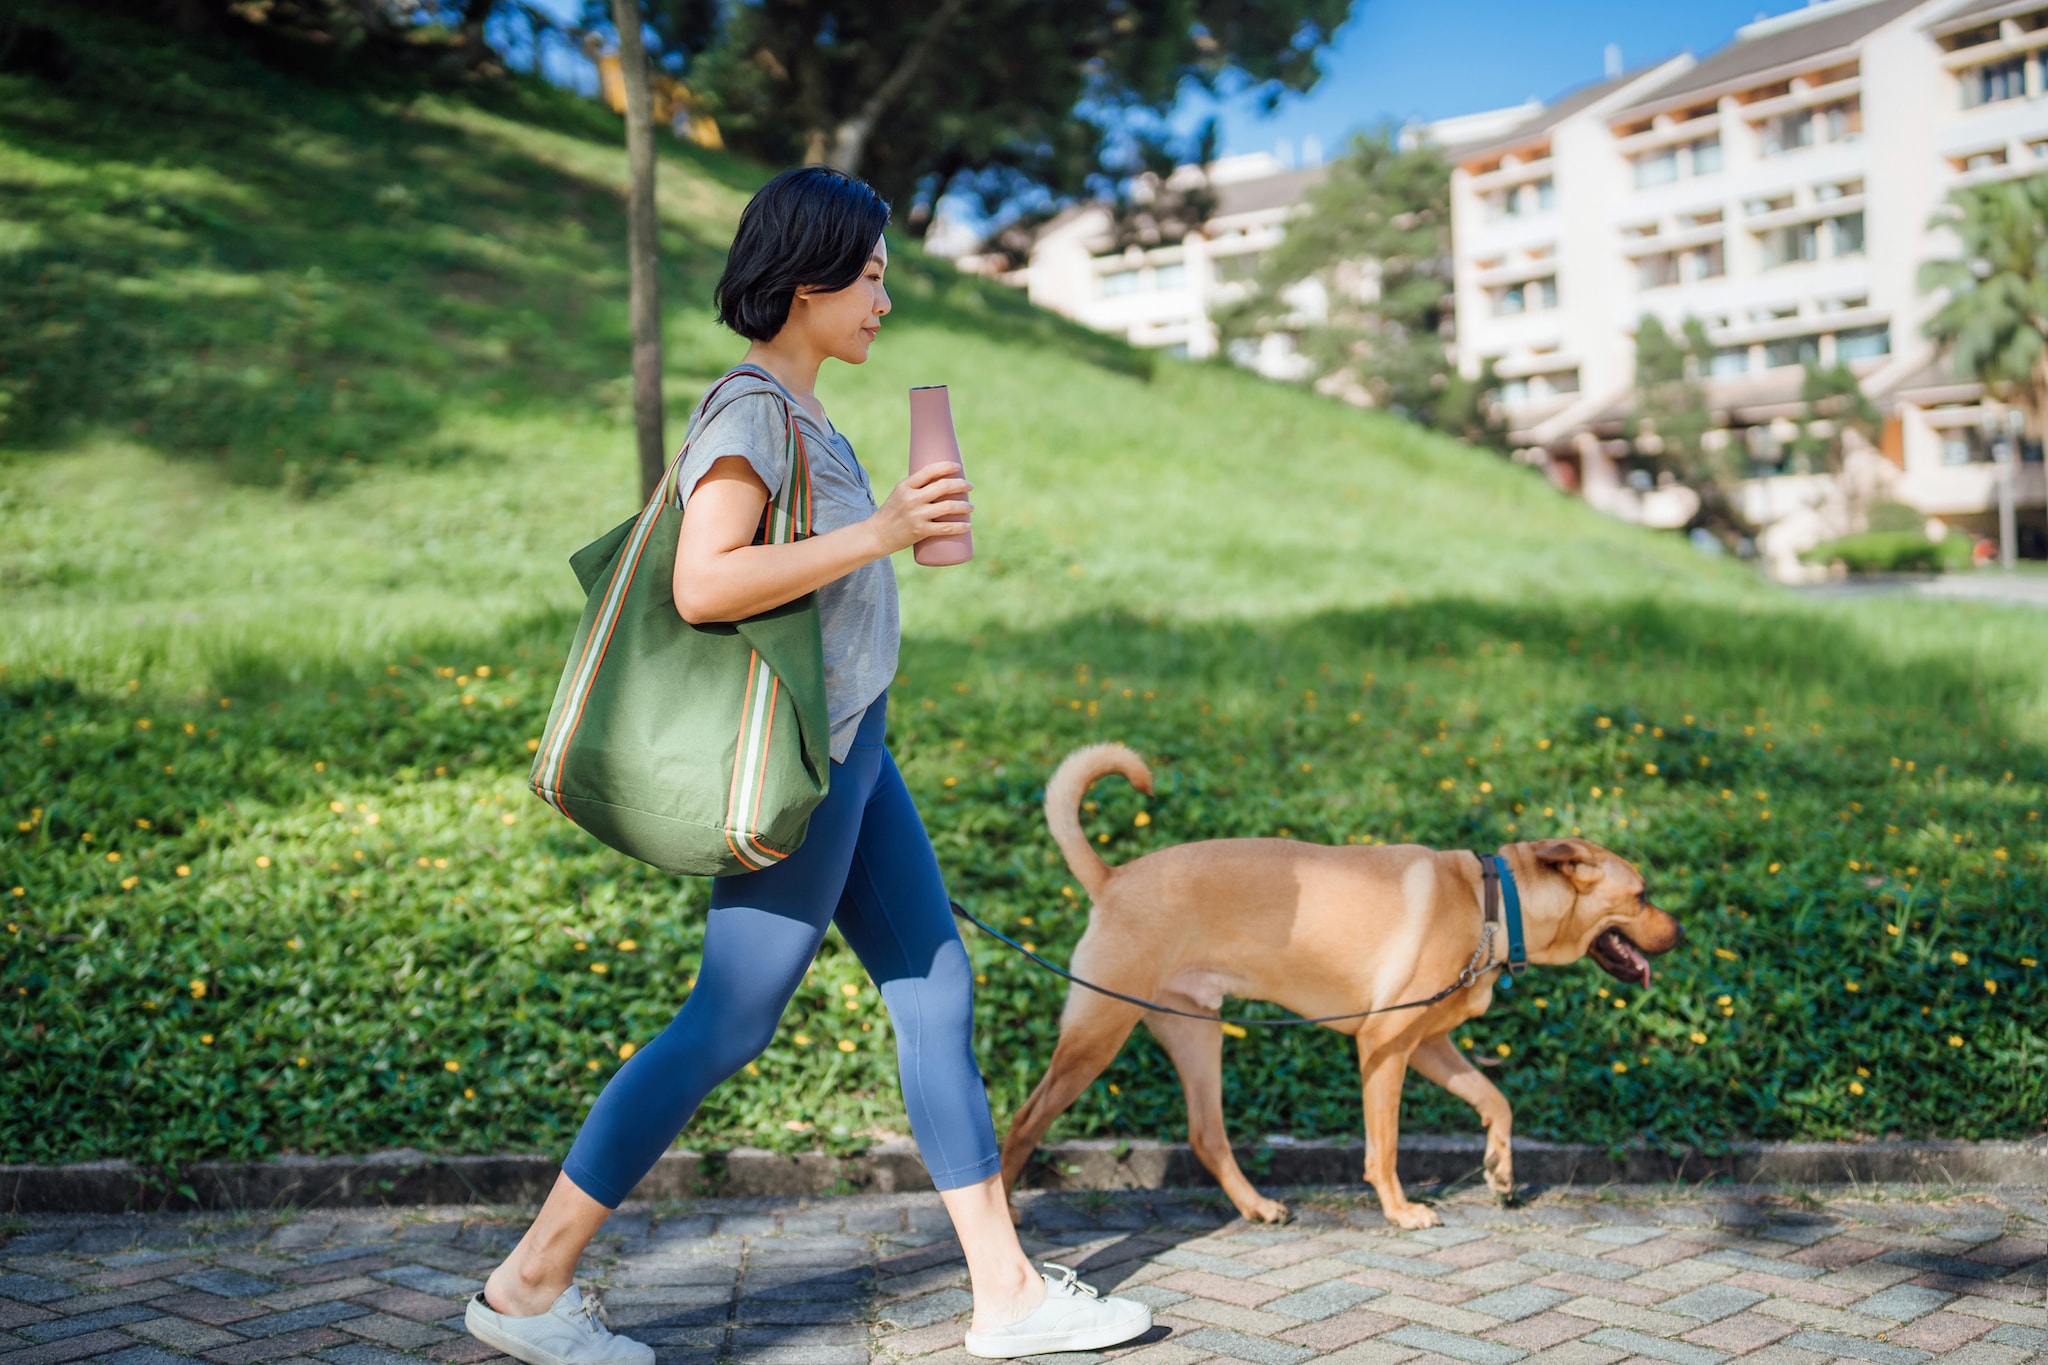 A woman walking a dog on a leash